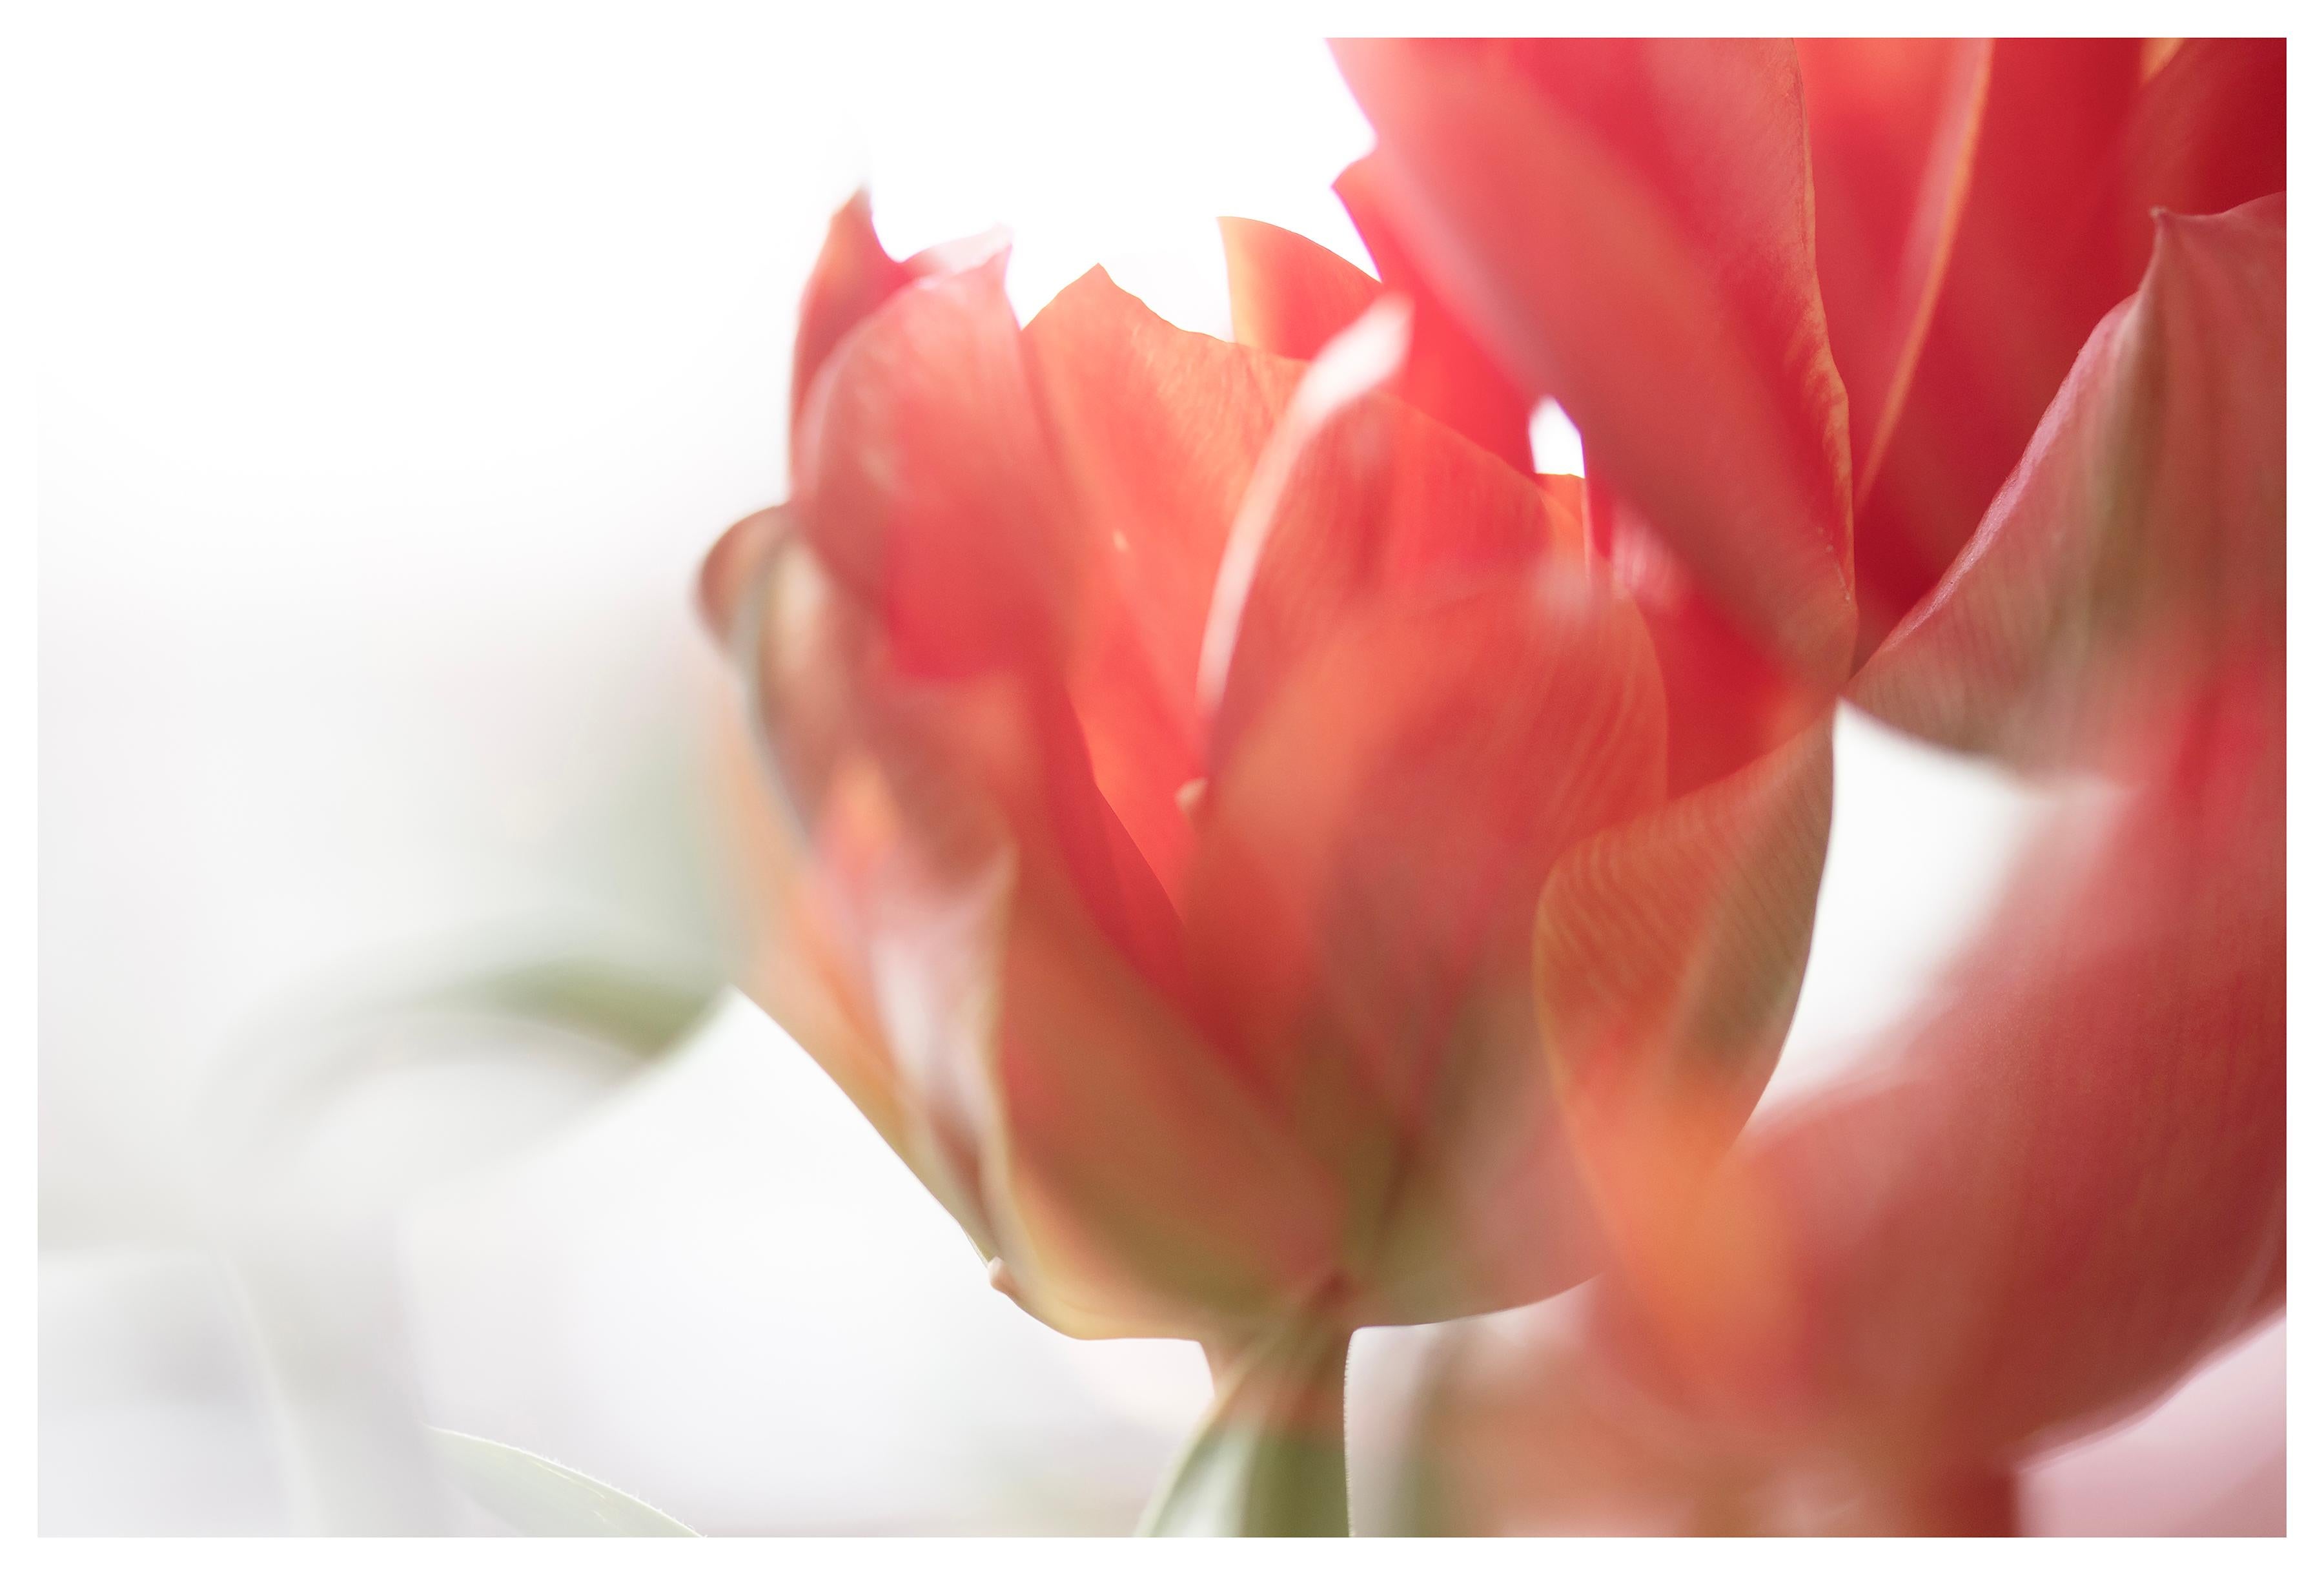 Sophia Milligan Abstract Photograph - 'Sunday's Tulips (II)' Large Scale Photo bold flower pastel red orange white